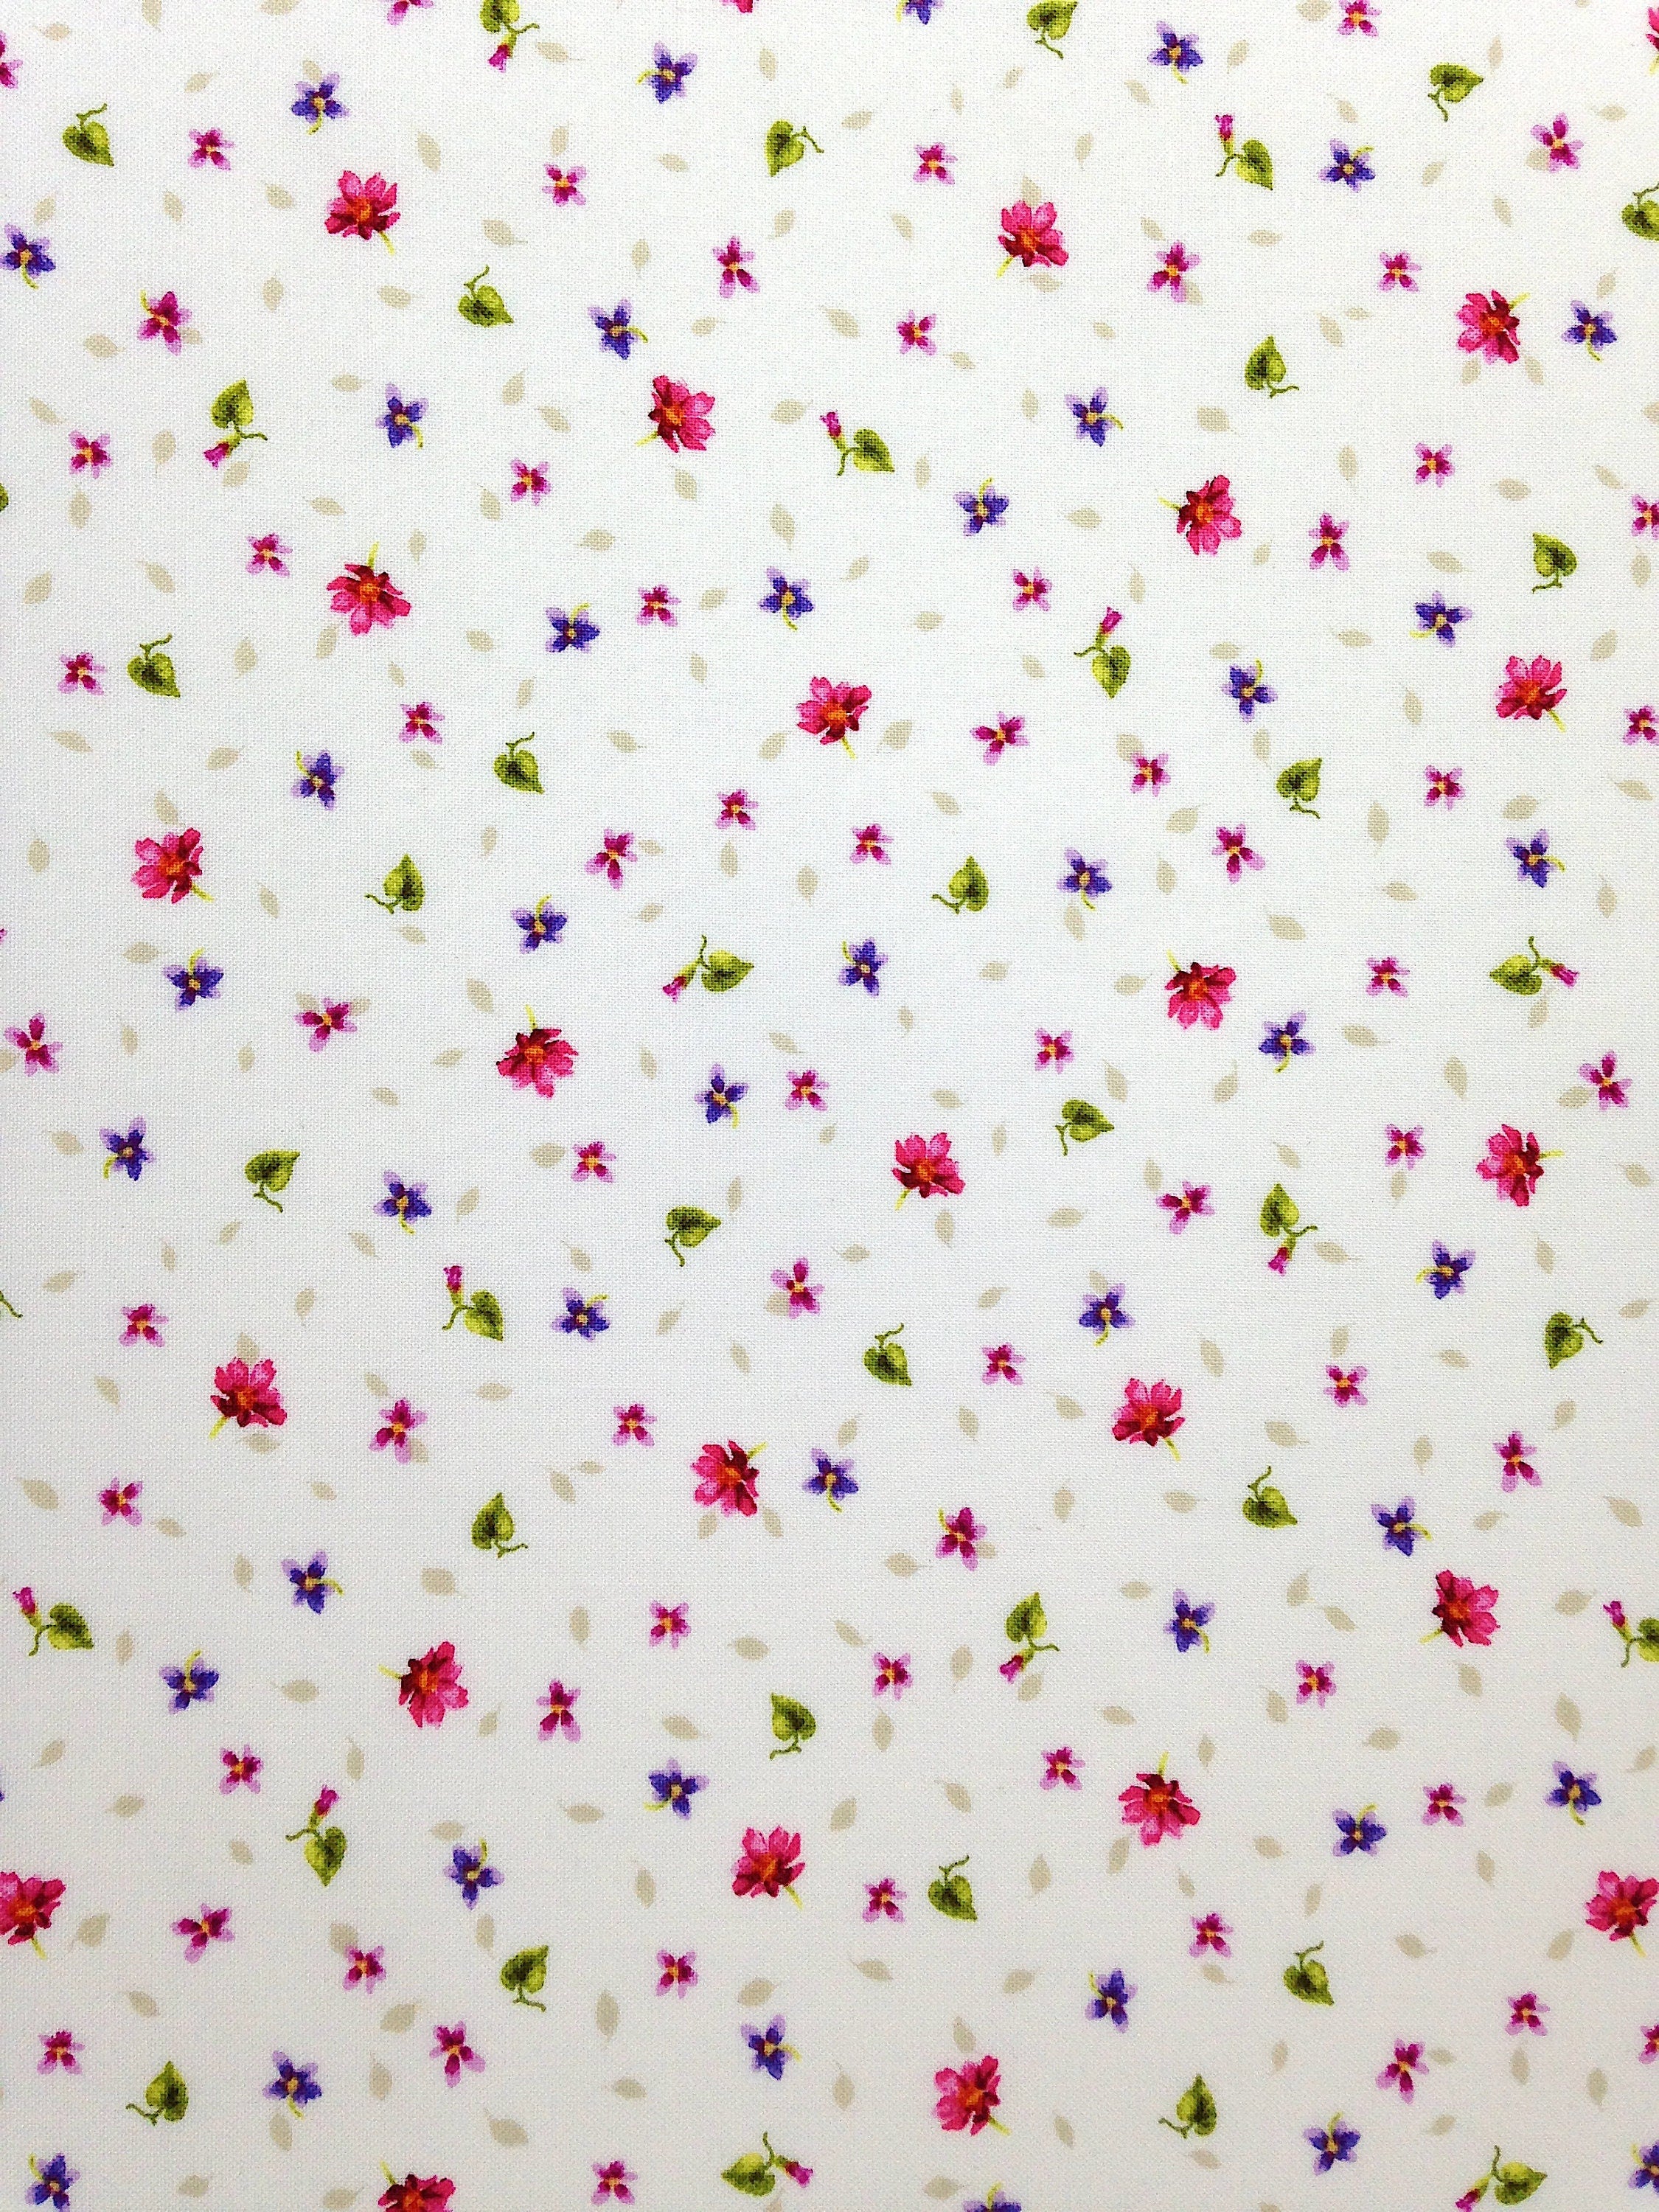 Flower Fabric - Adalees Garden Cream - Red Rooster Fabrics - Quilting Fabric - Cotton Fabric - FL-12